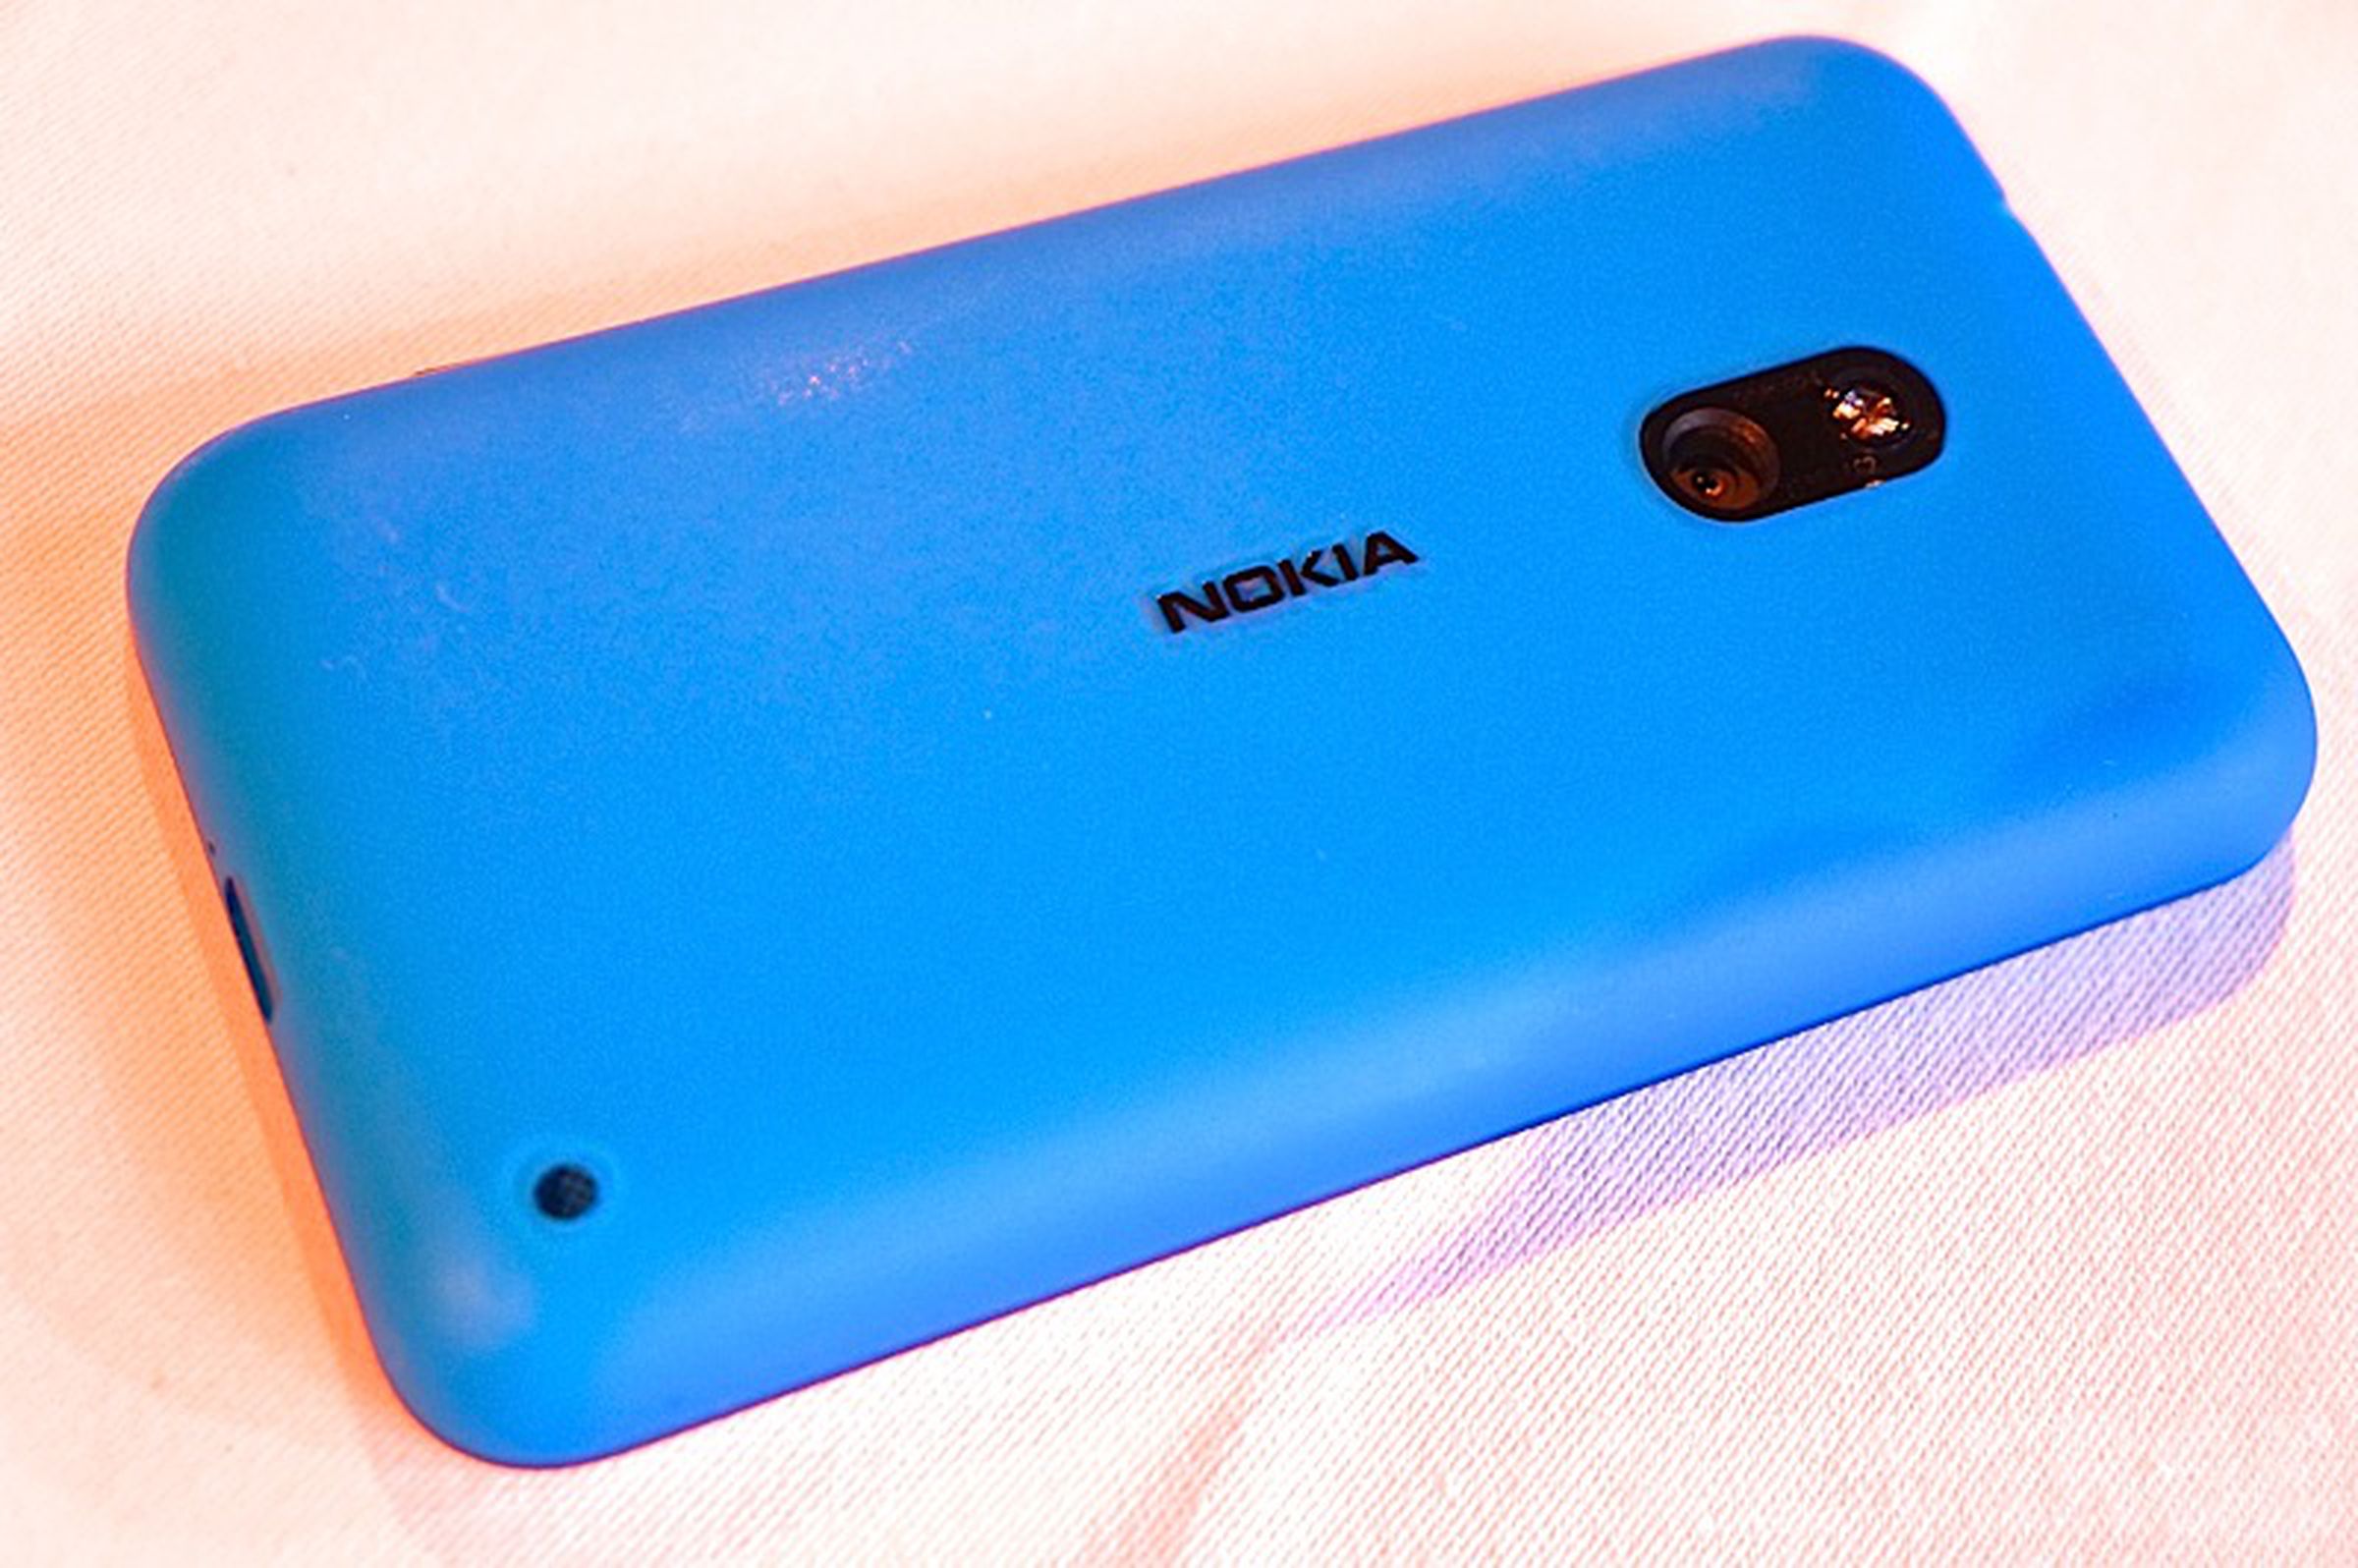 Nokia Lumia 620 hands-on gallery